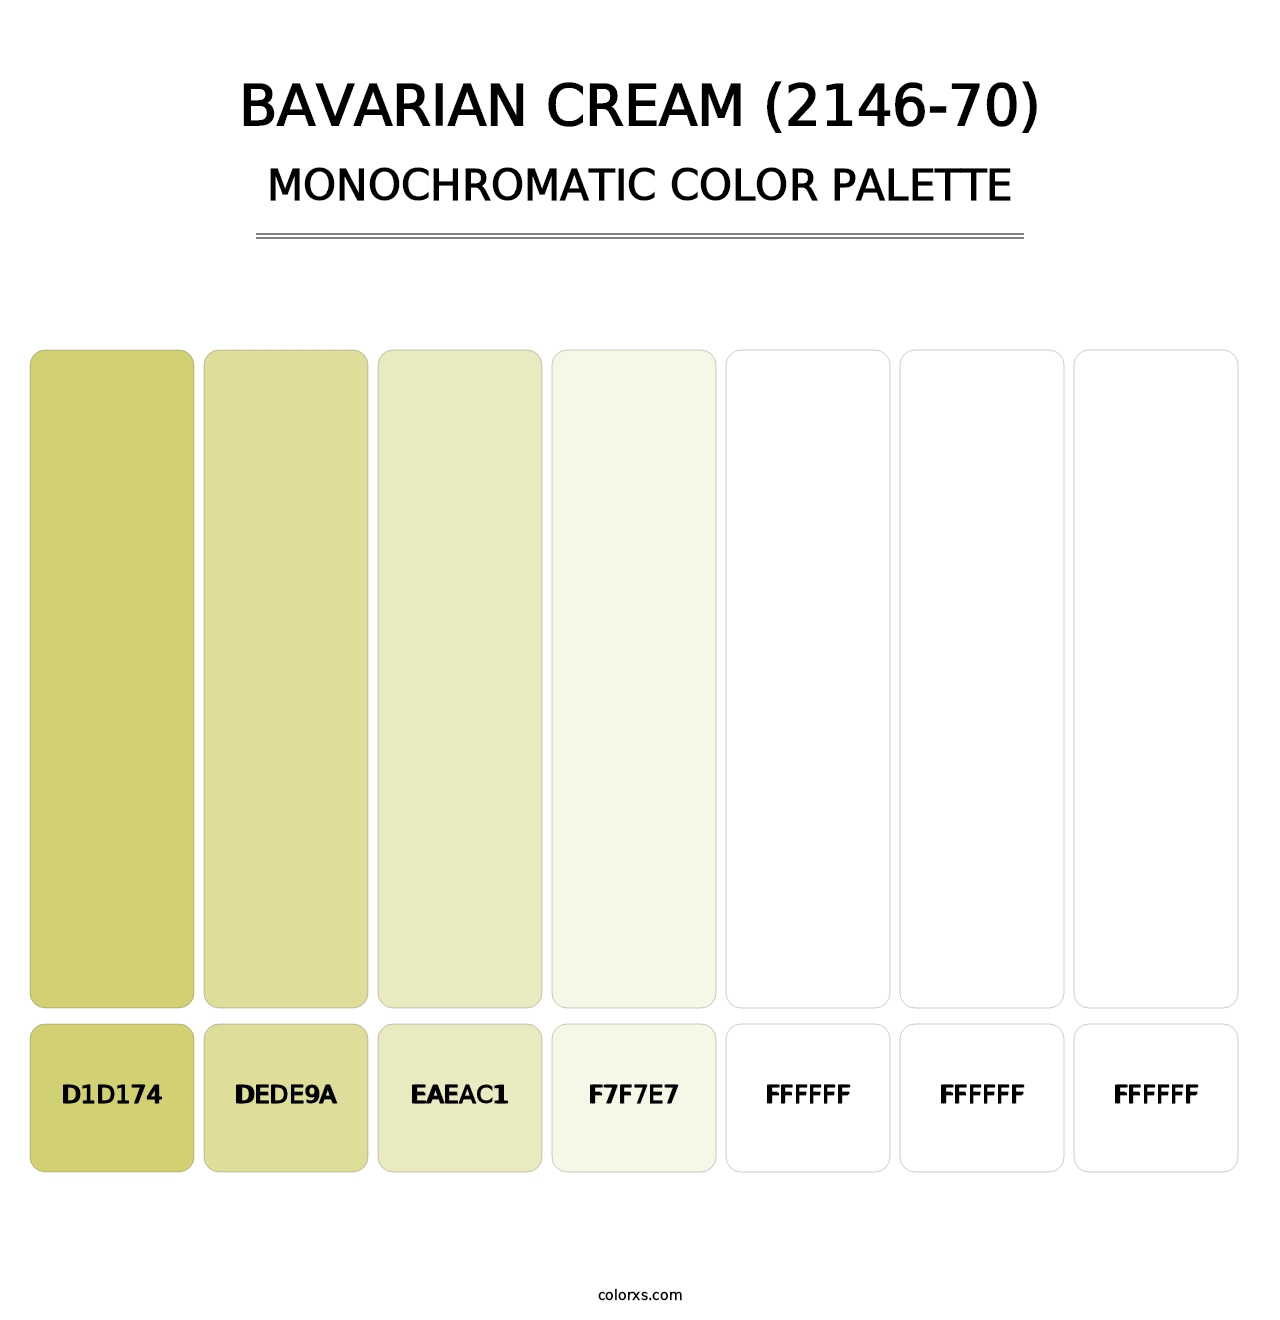 Bavarian Cream (2146-70) - Monochromatic Color Palette